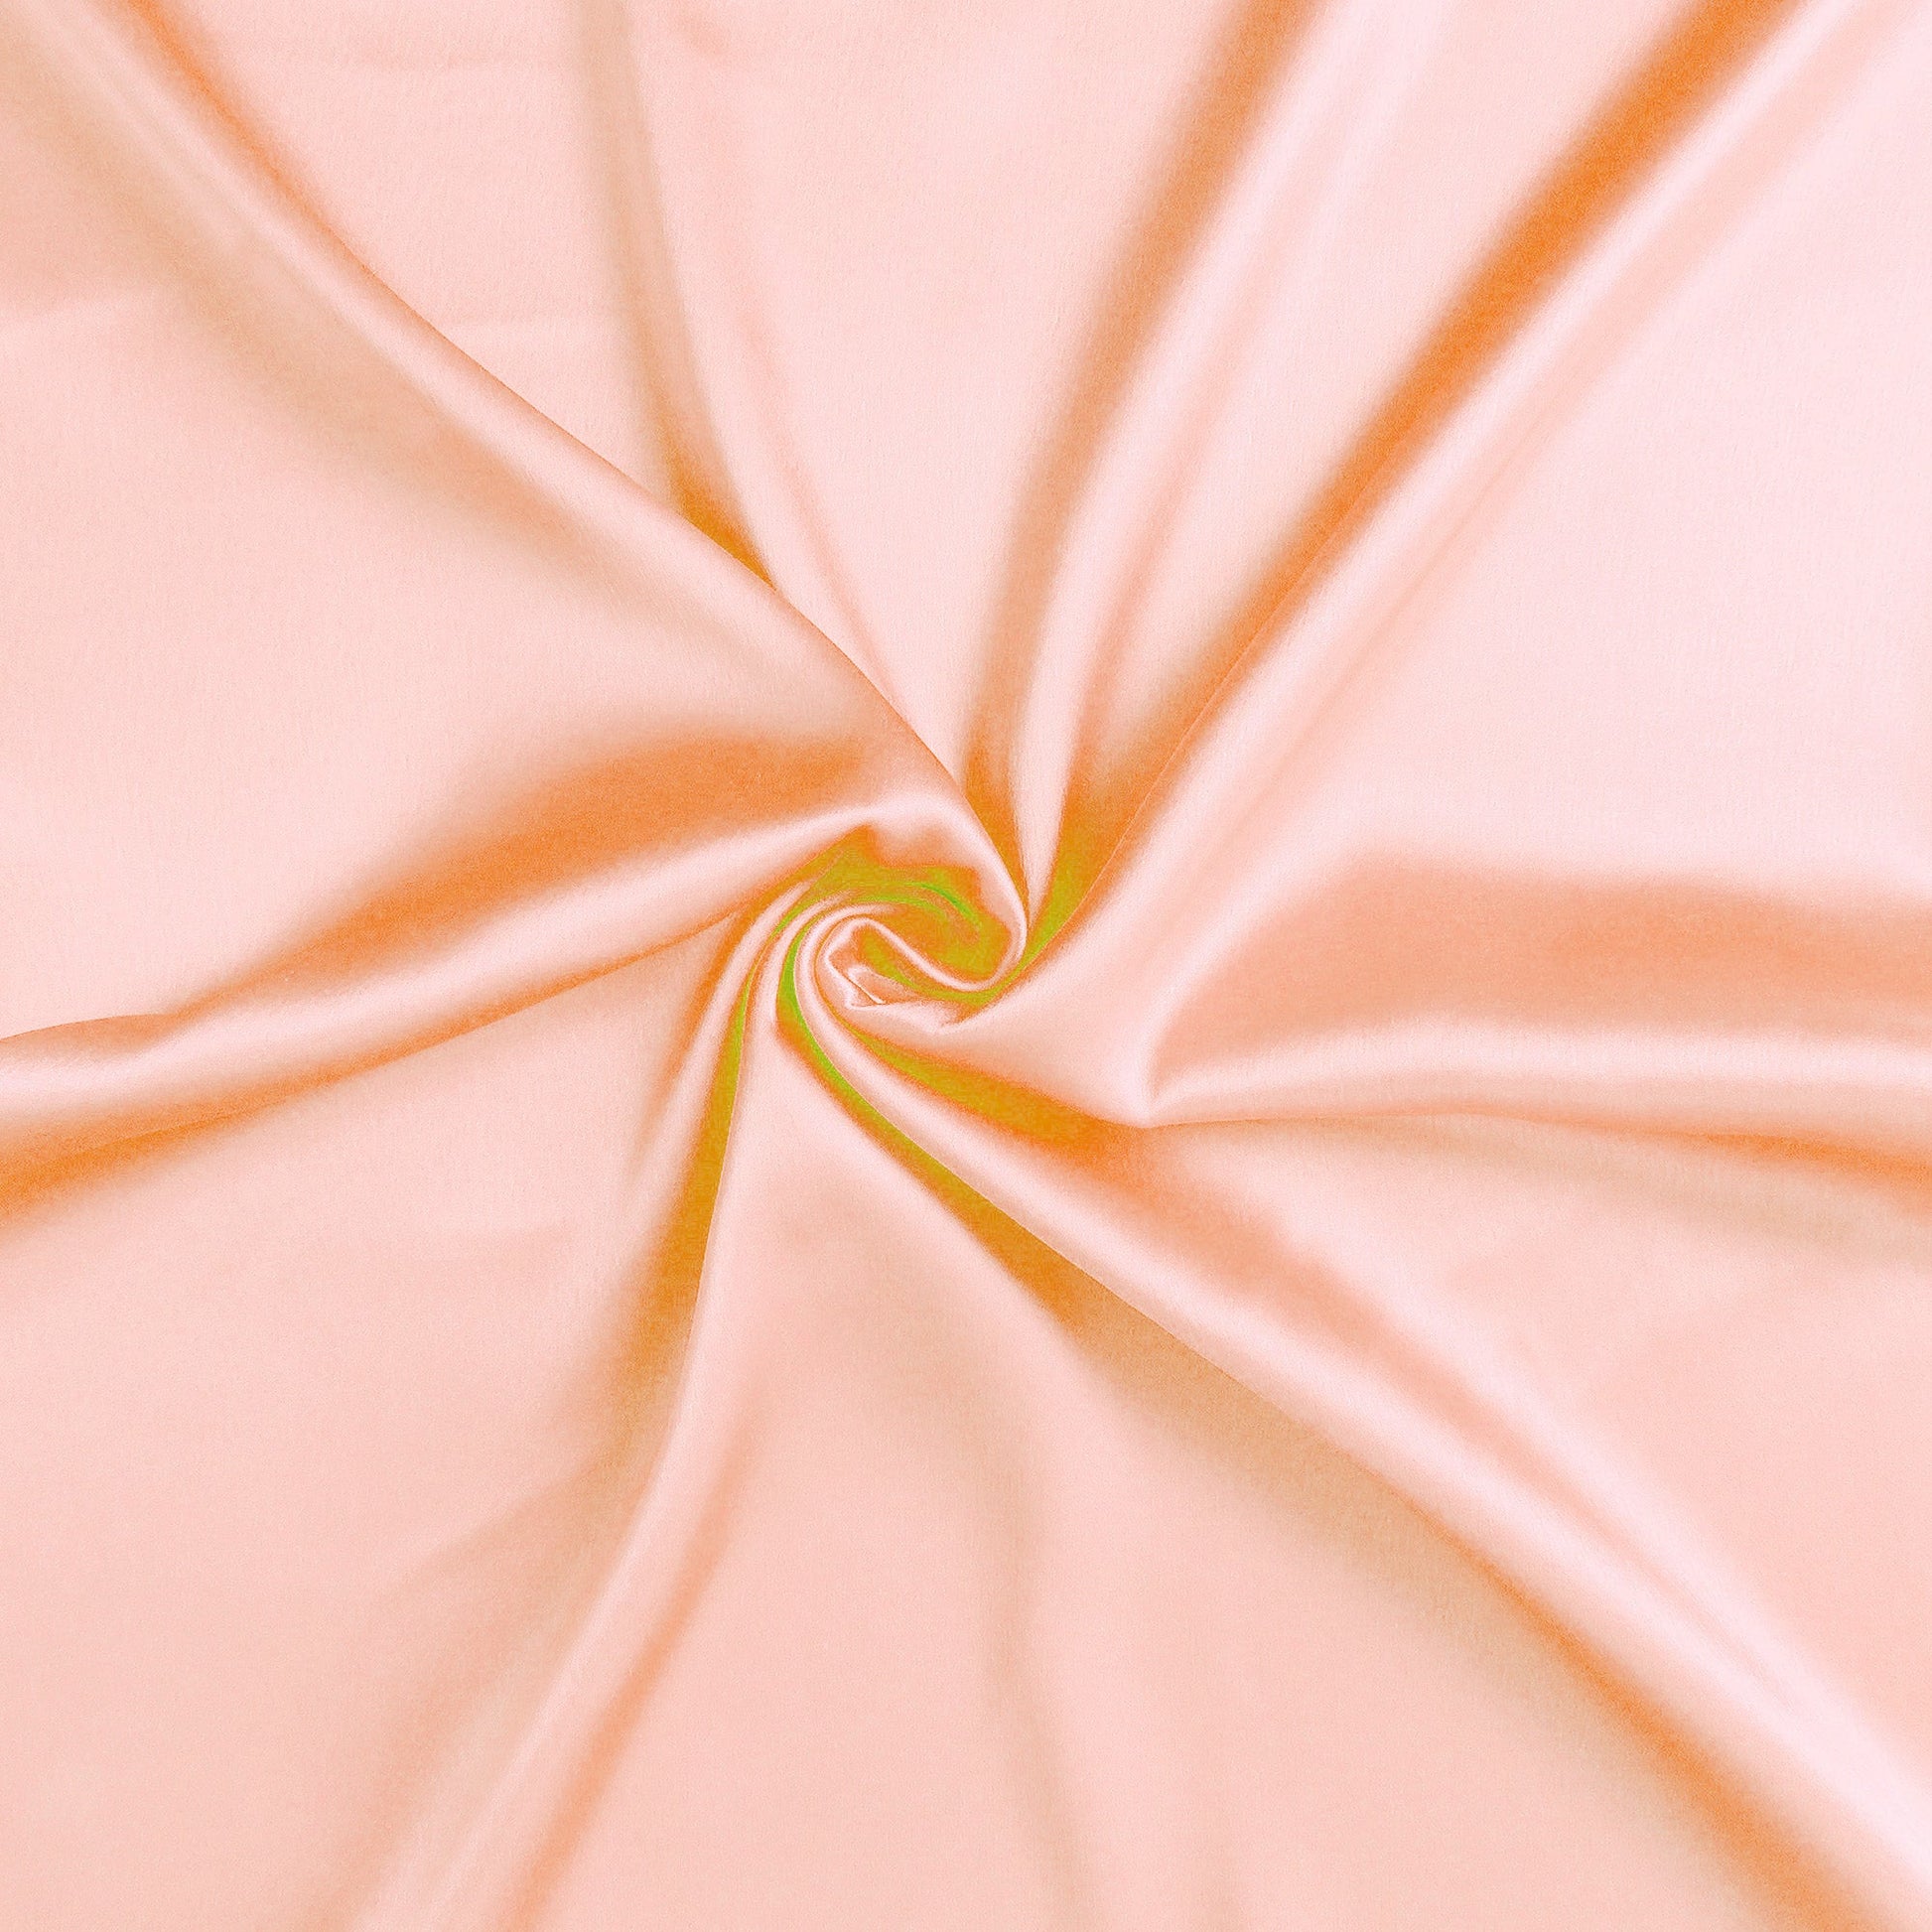 Luxury Soft Plain Satin Silk Pillowcases in Set of 2 - Gossamer Pink